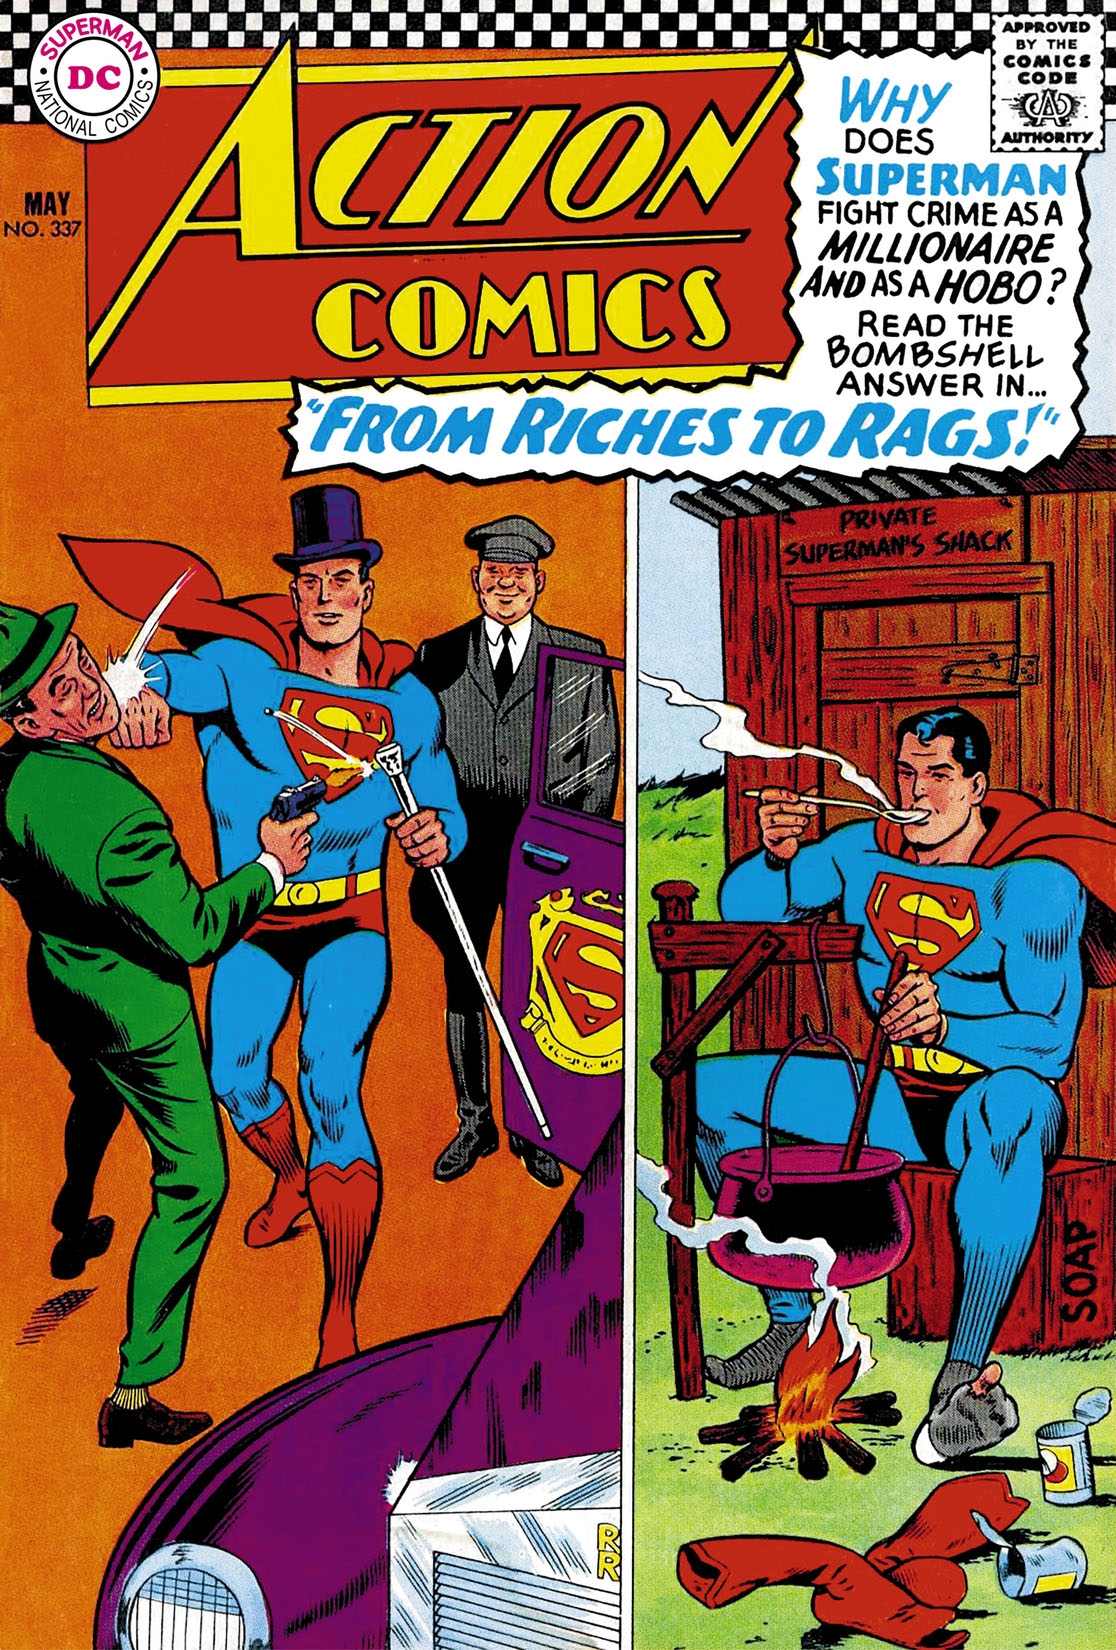 Action Comics (1938-2011) #337 preview images